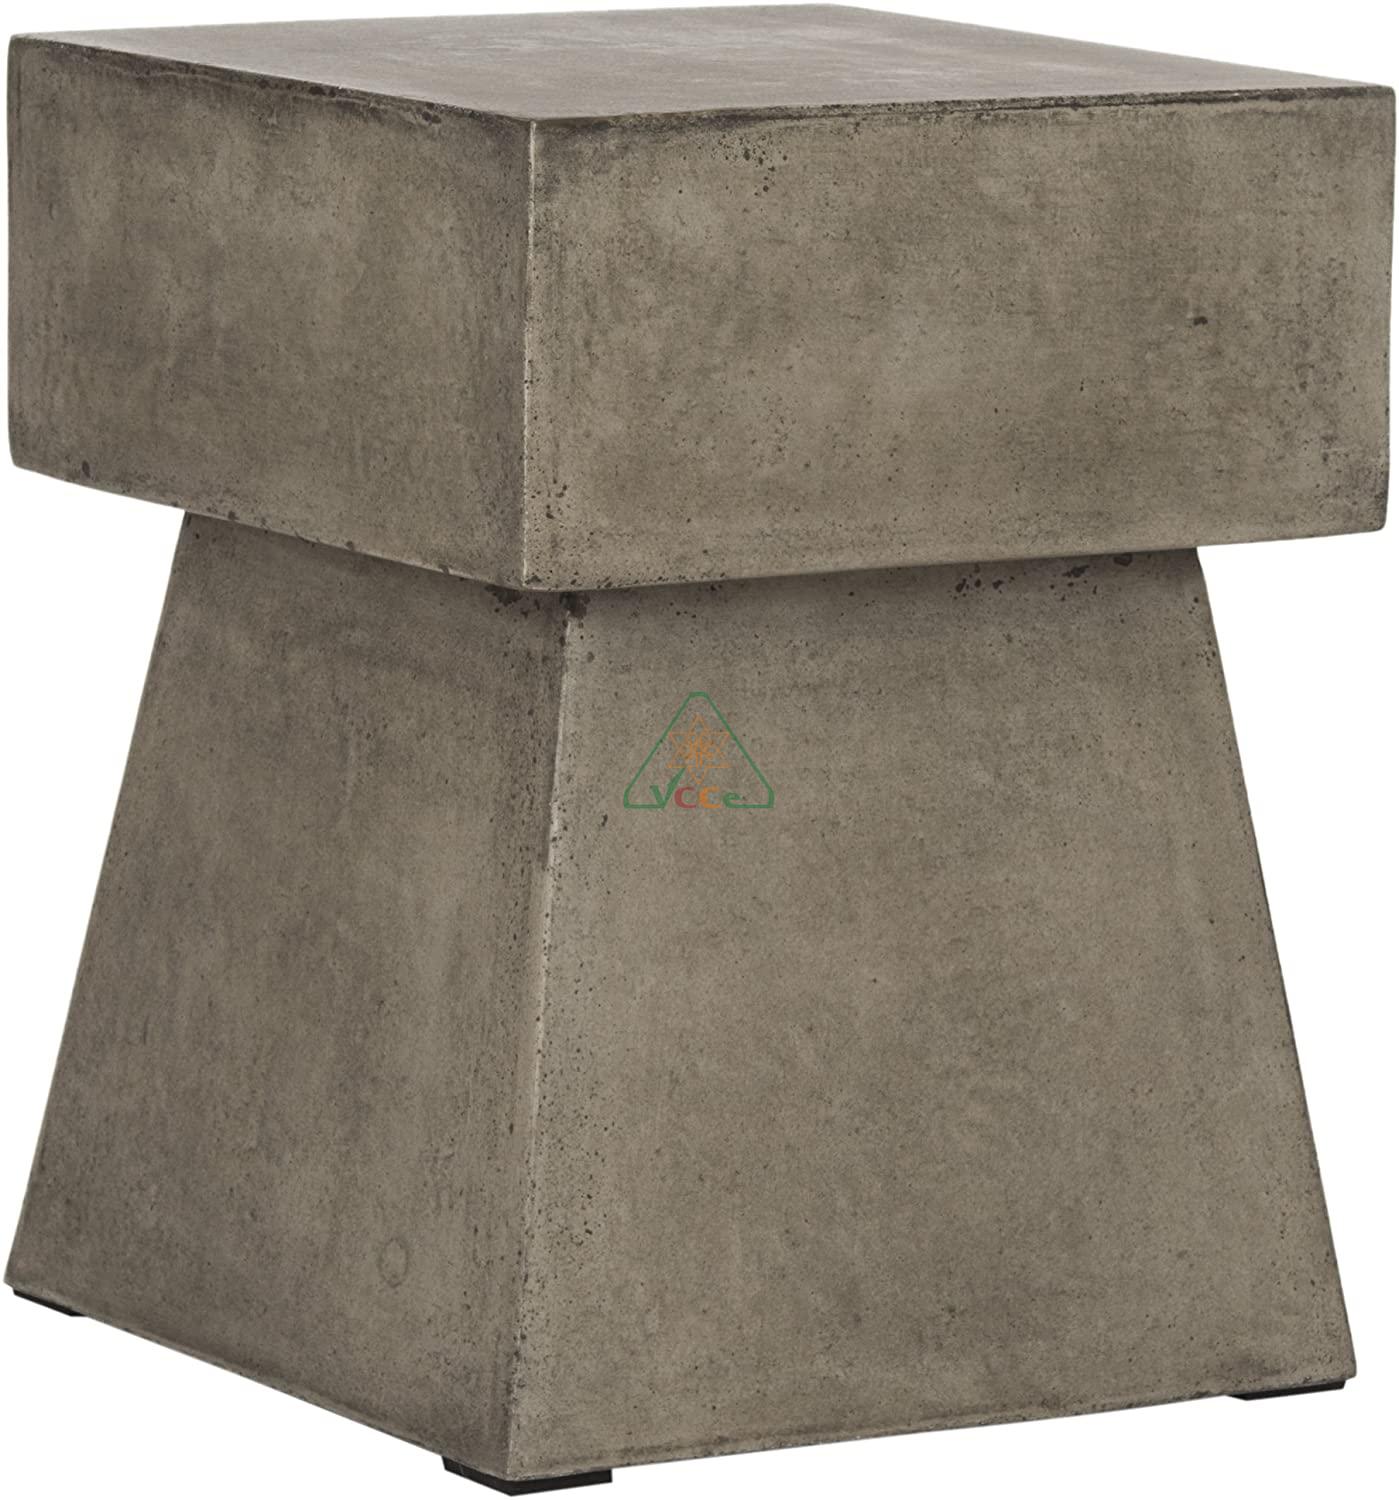 Square concrete stool